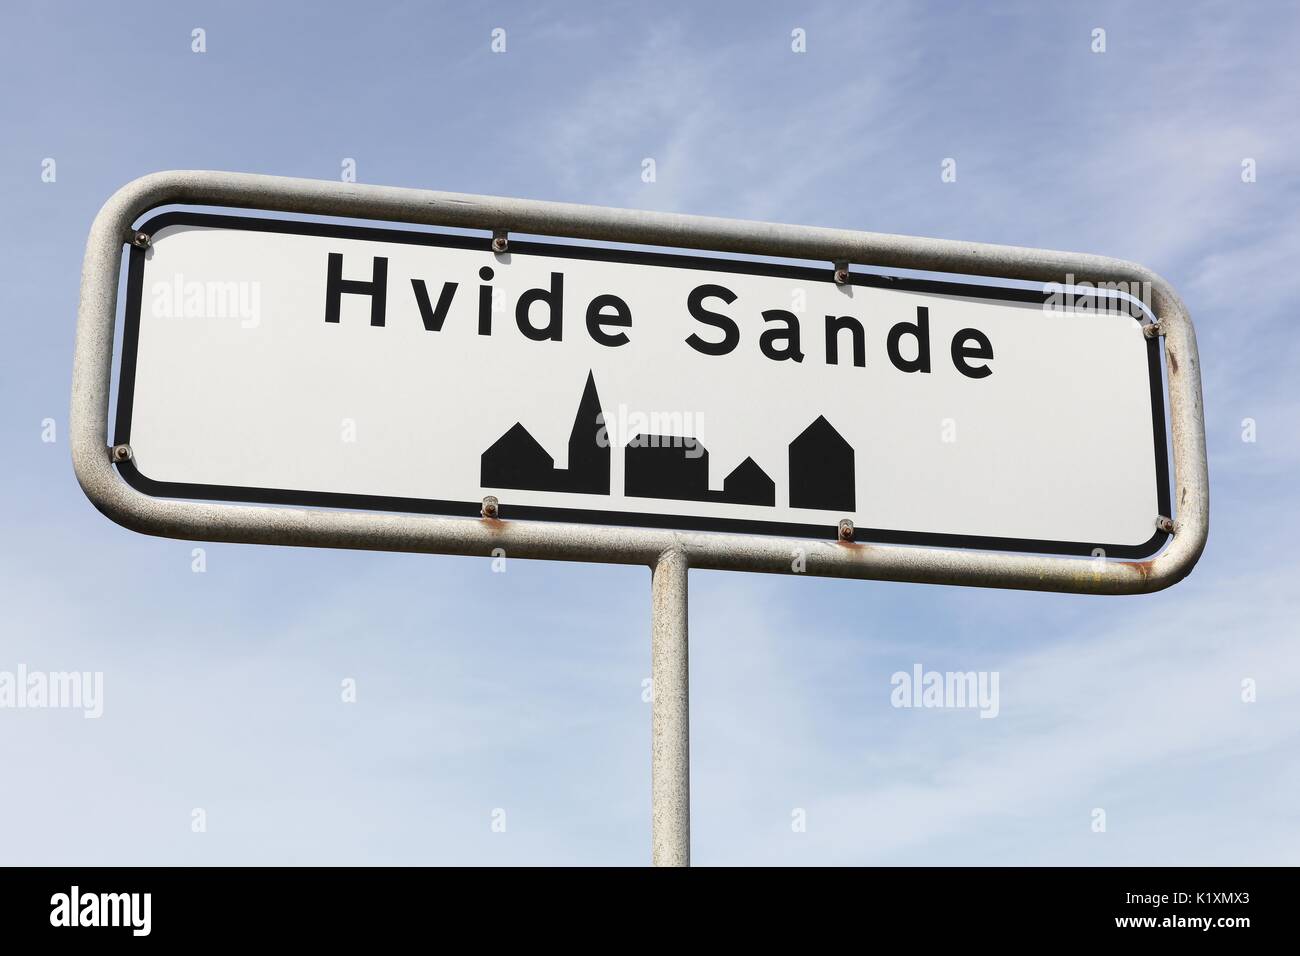 Hvide Sande city road sign in Denmark Stock Photo